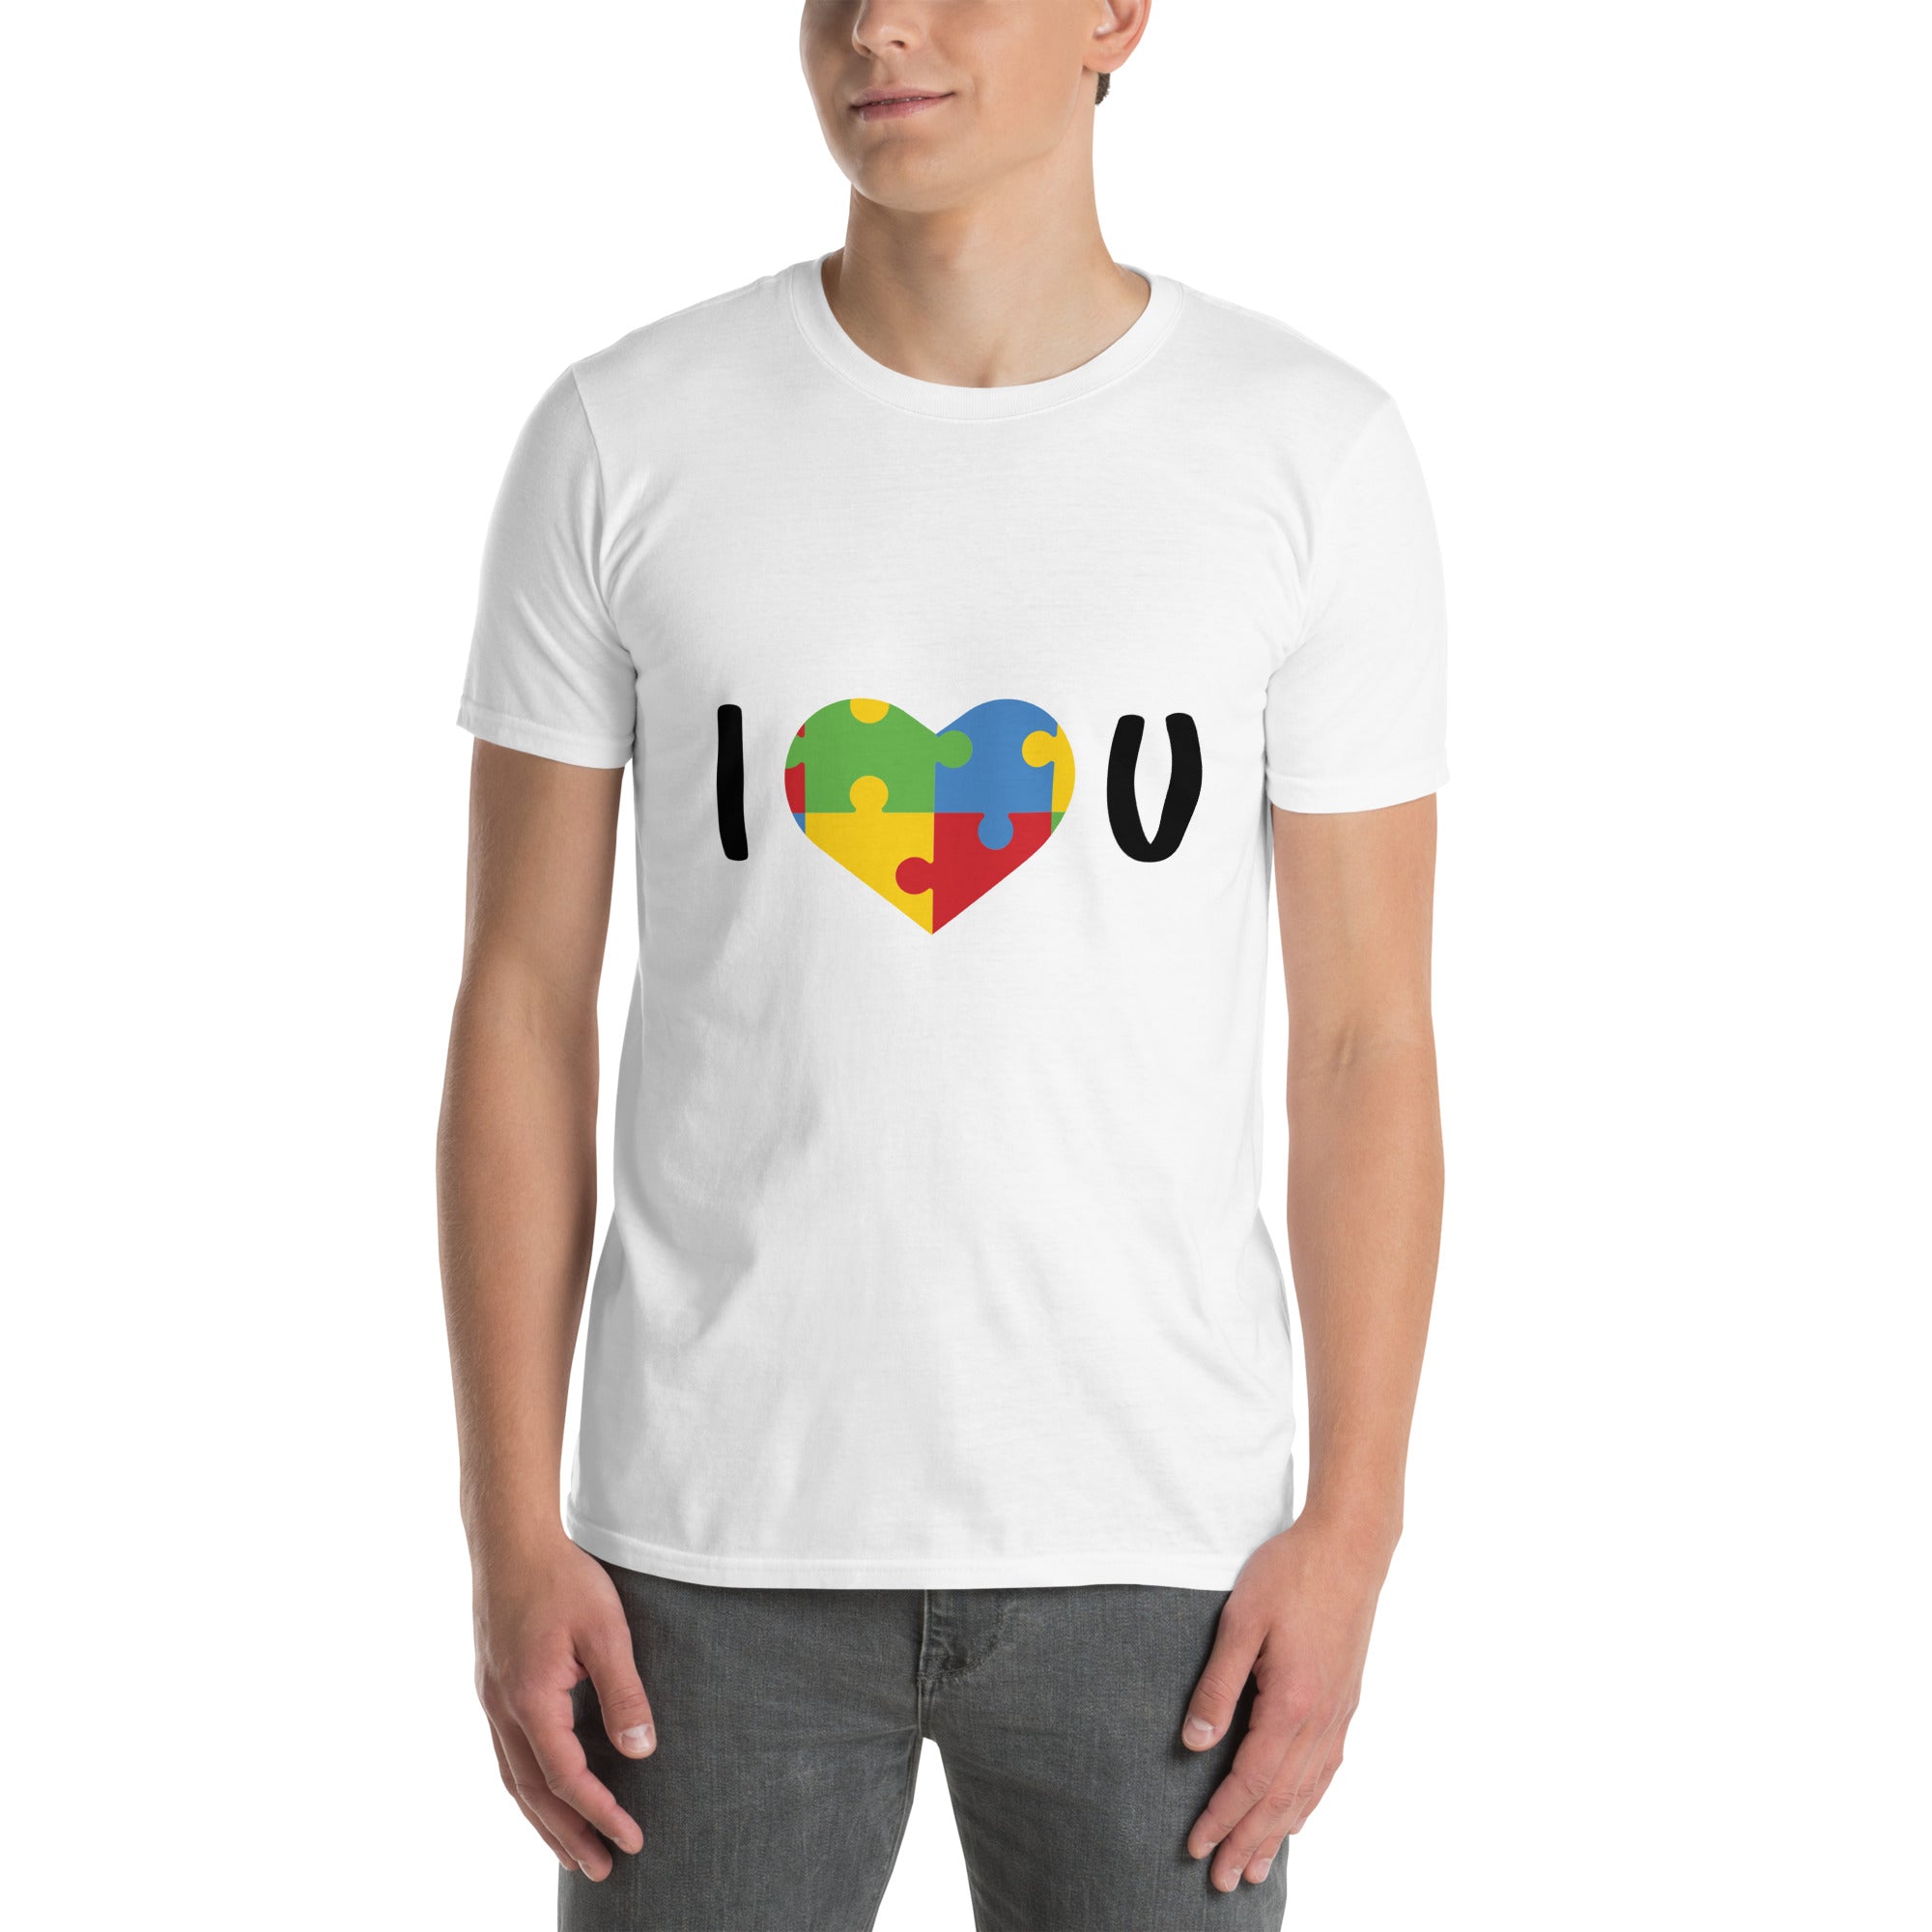 Short-Sleeve Unisex T-Shirt- I Love U